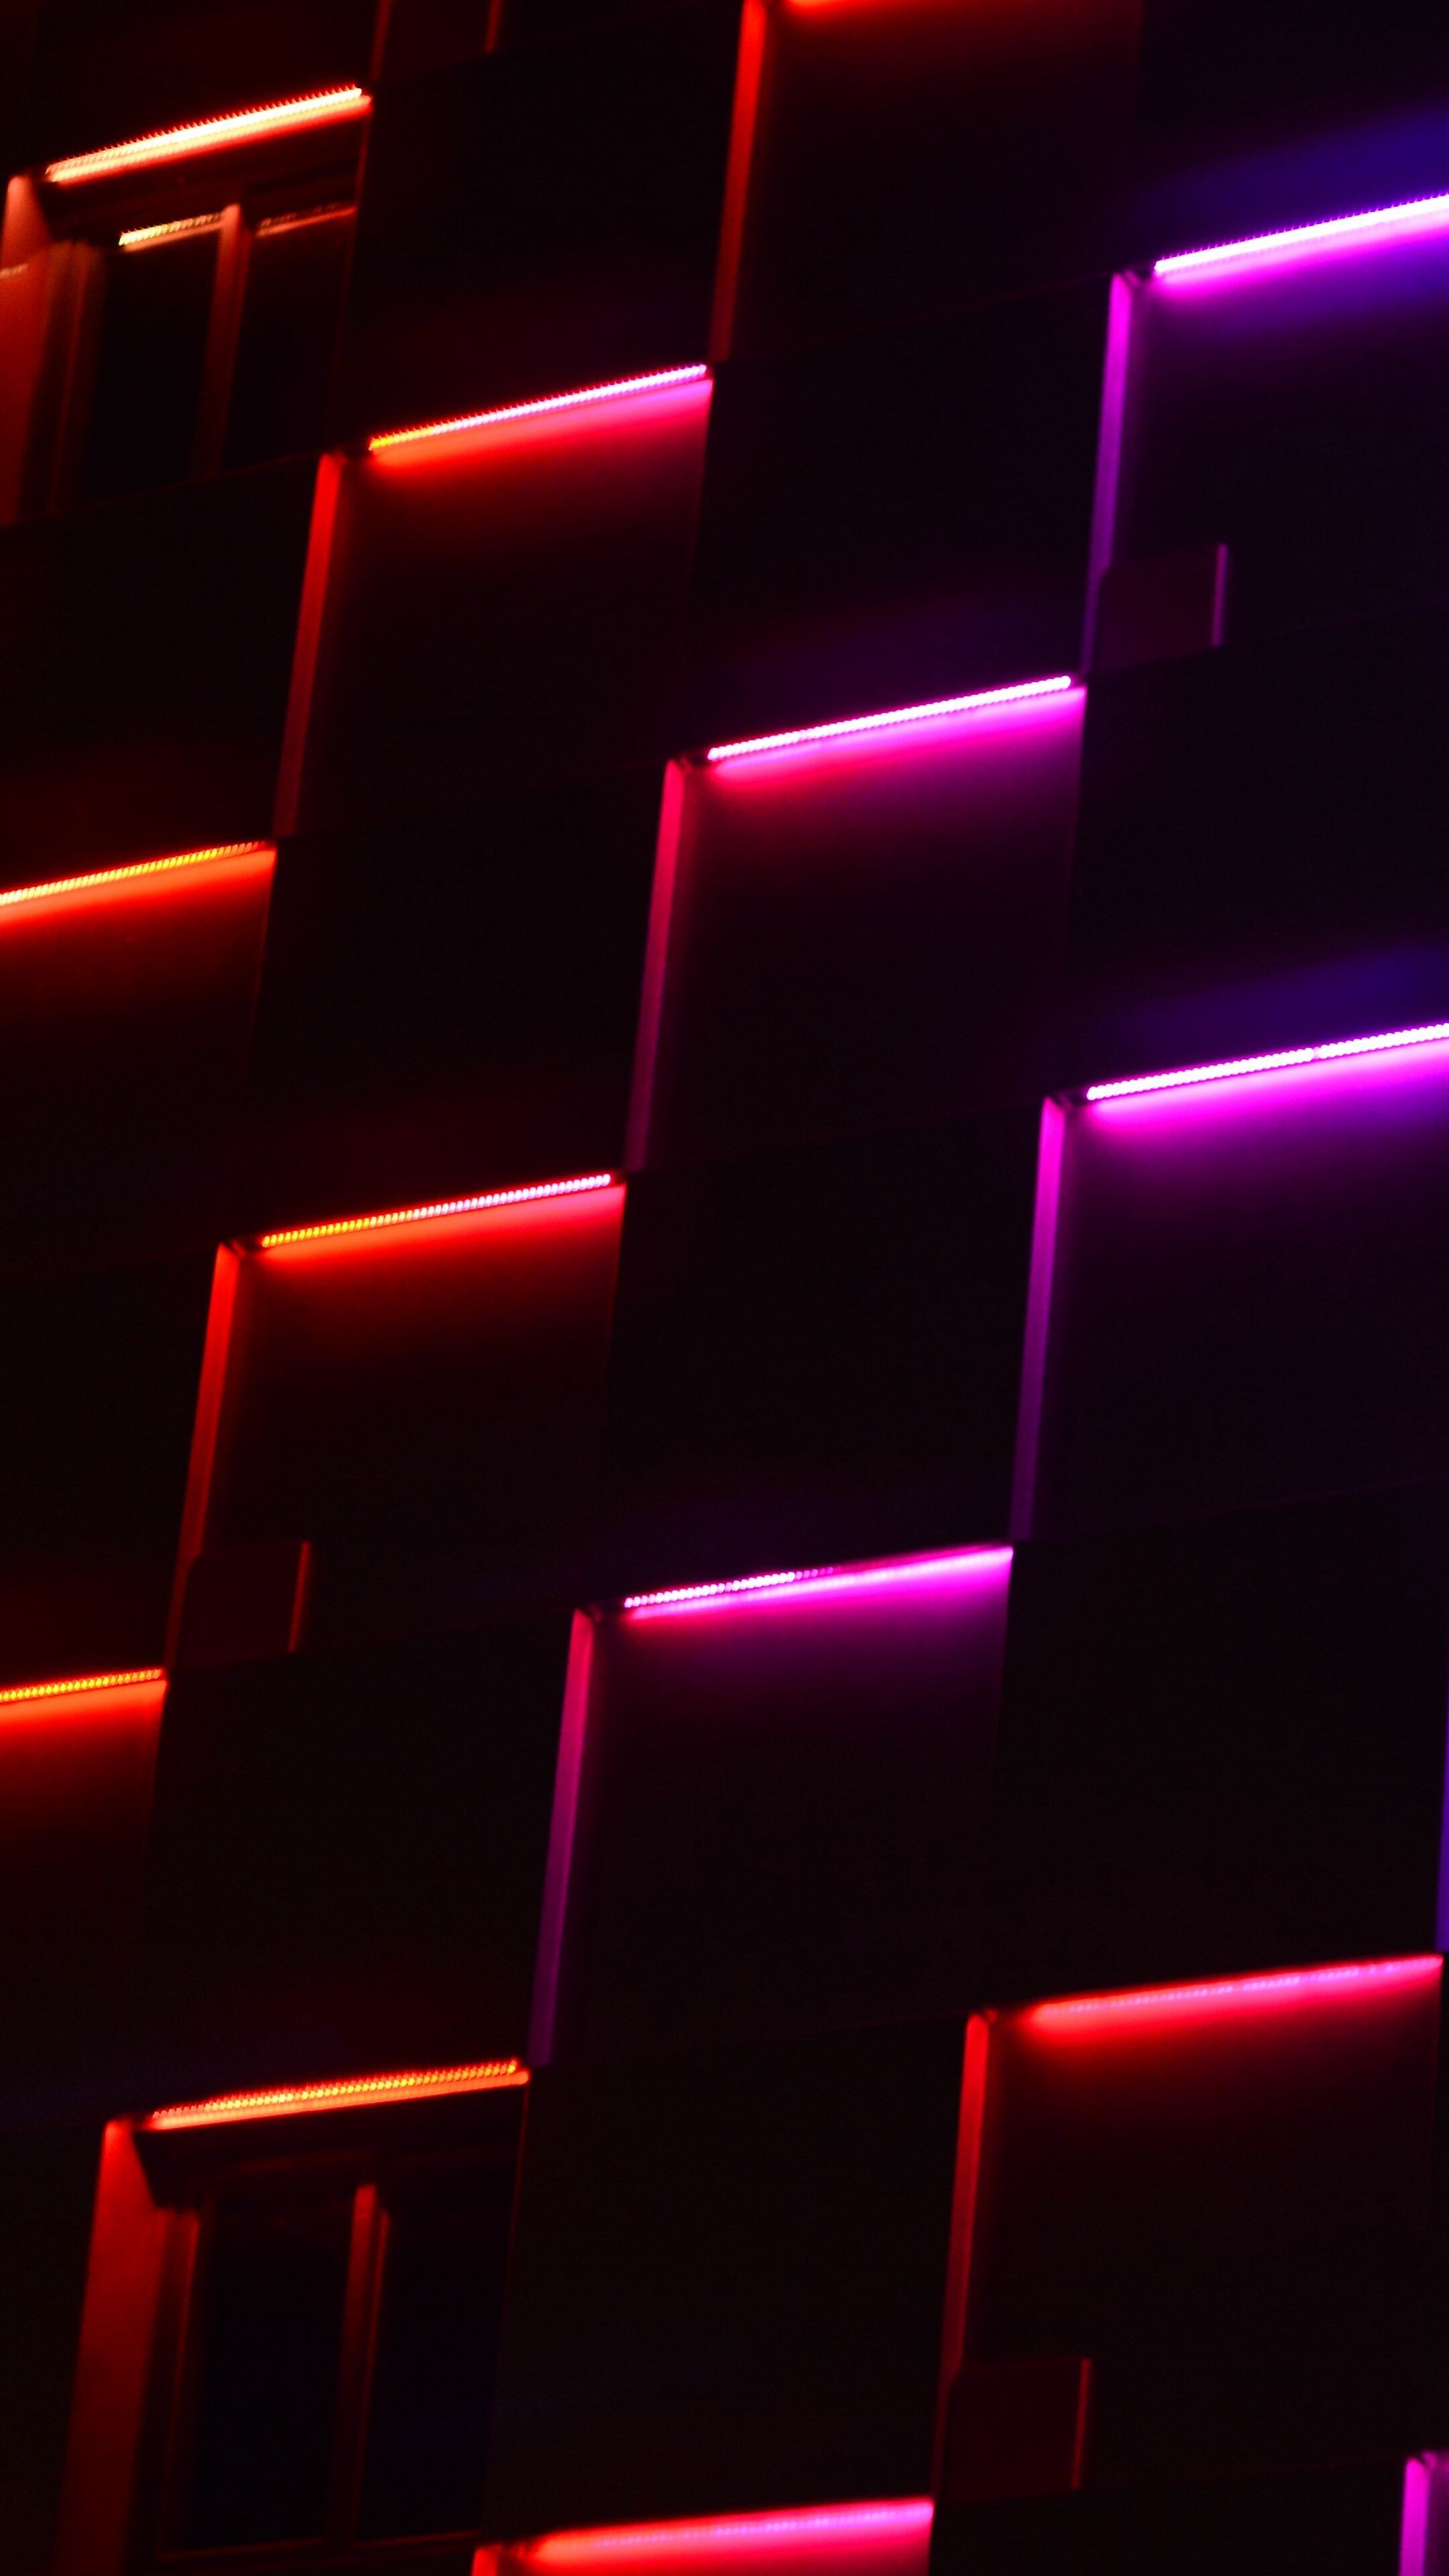 Glow in the Dark: Fluorescent edges, Ladder pattern, Minimalistic, Abstraction. 2160x3840 4K Wallpaper.